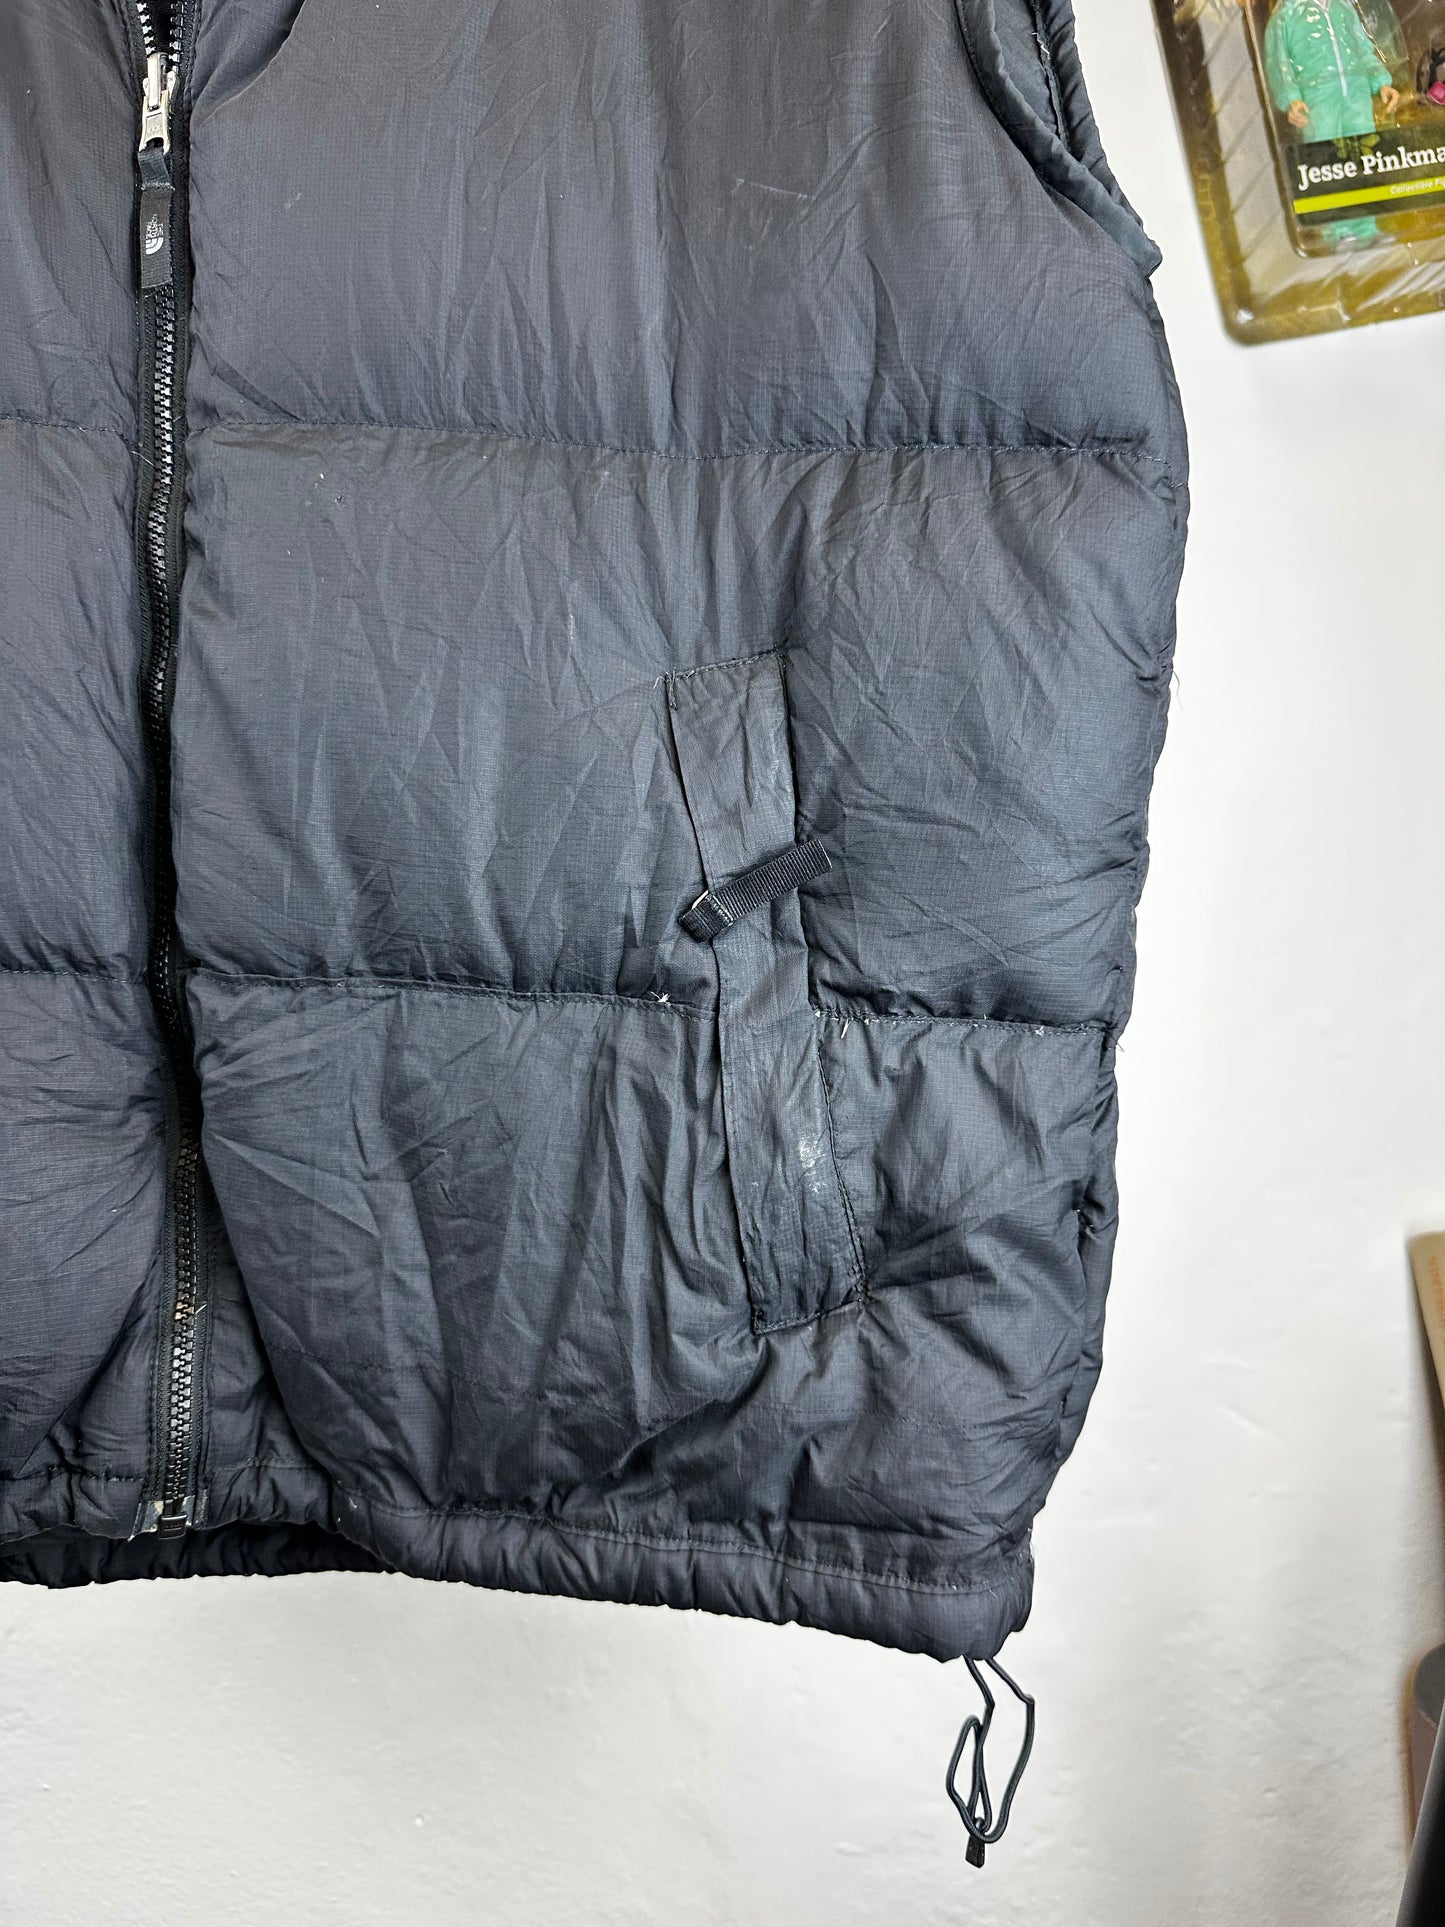 North Face Puffer Vest - size L